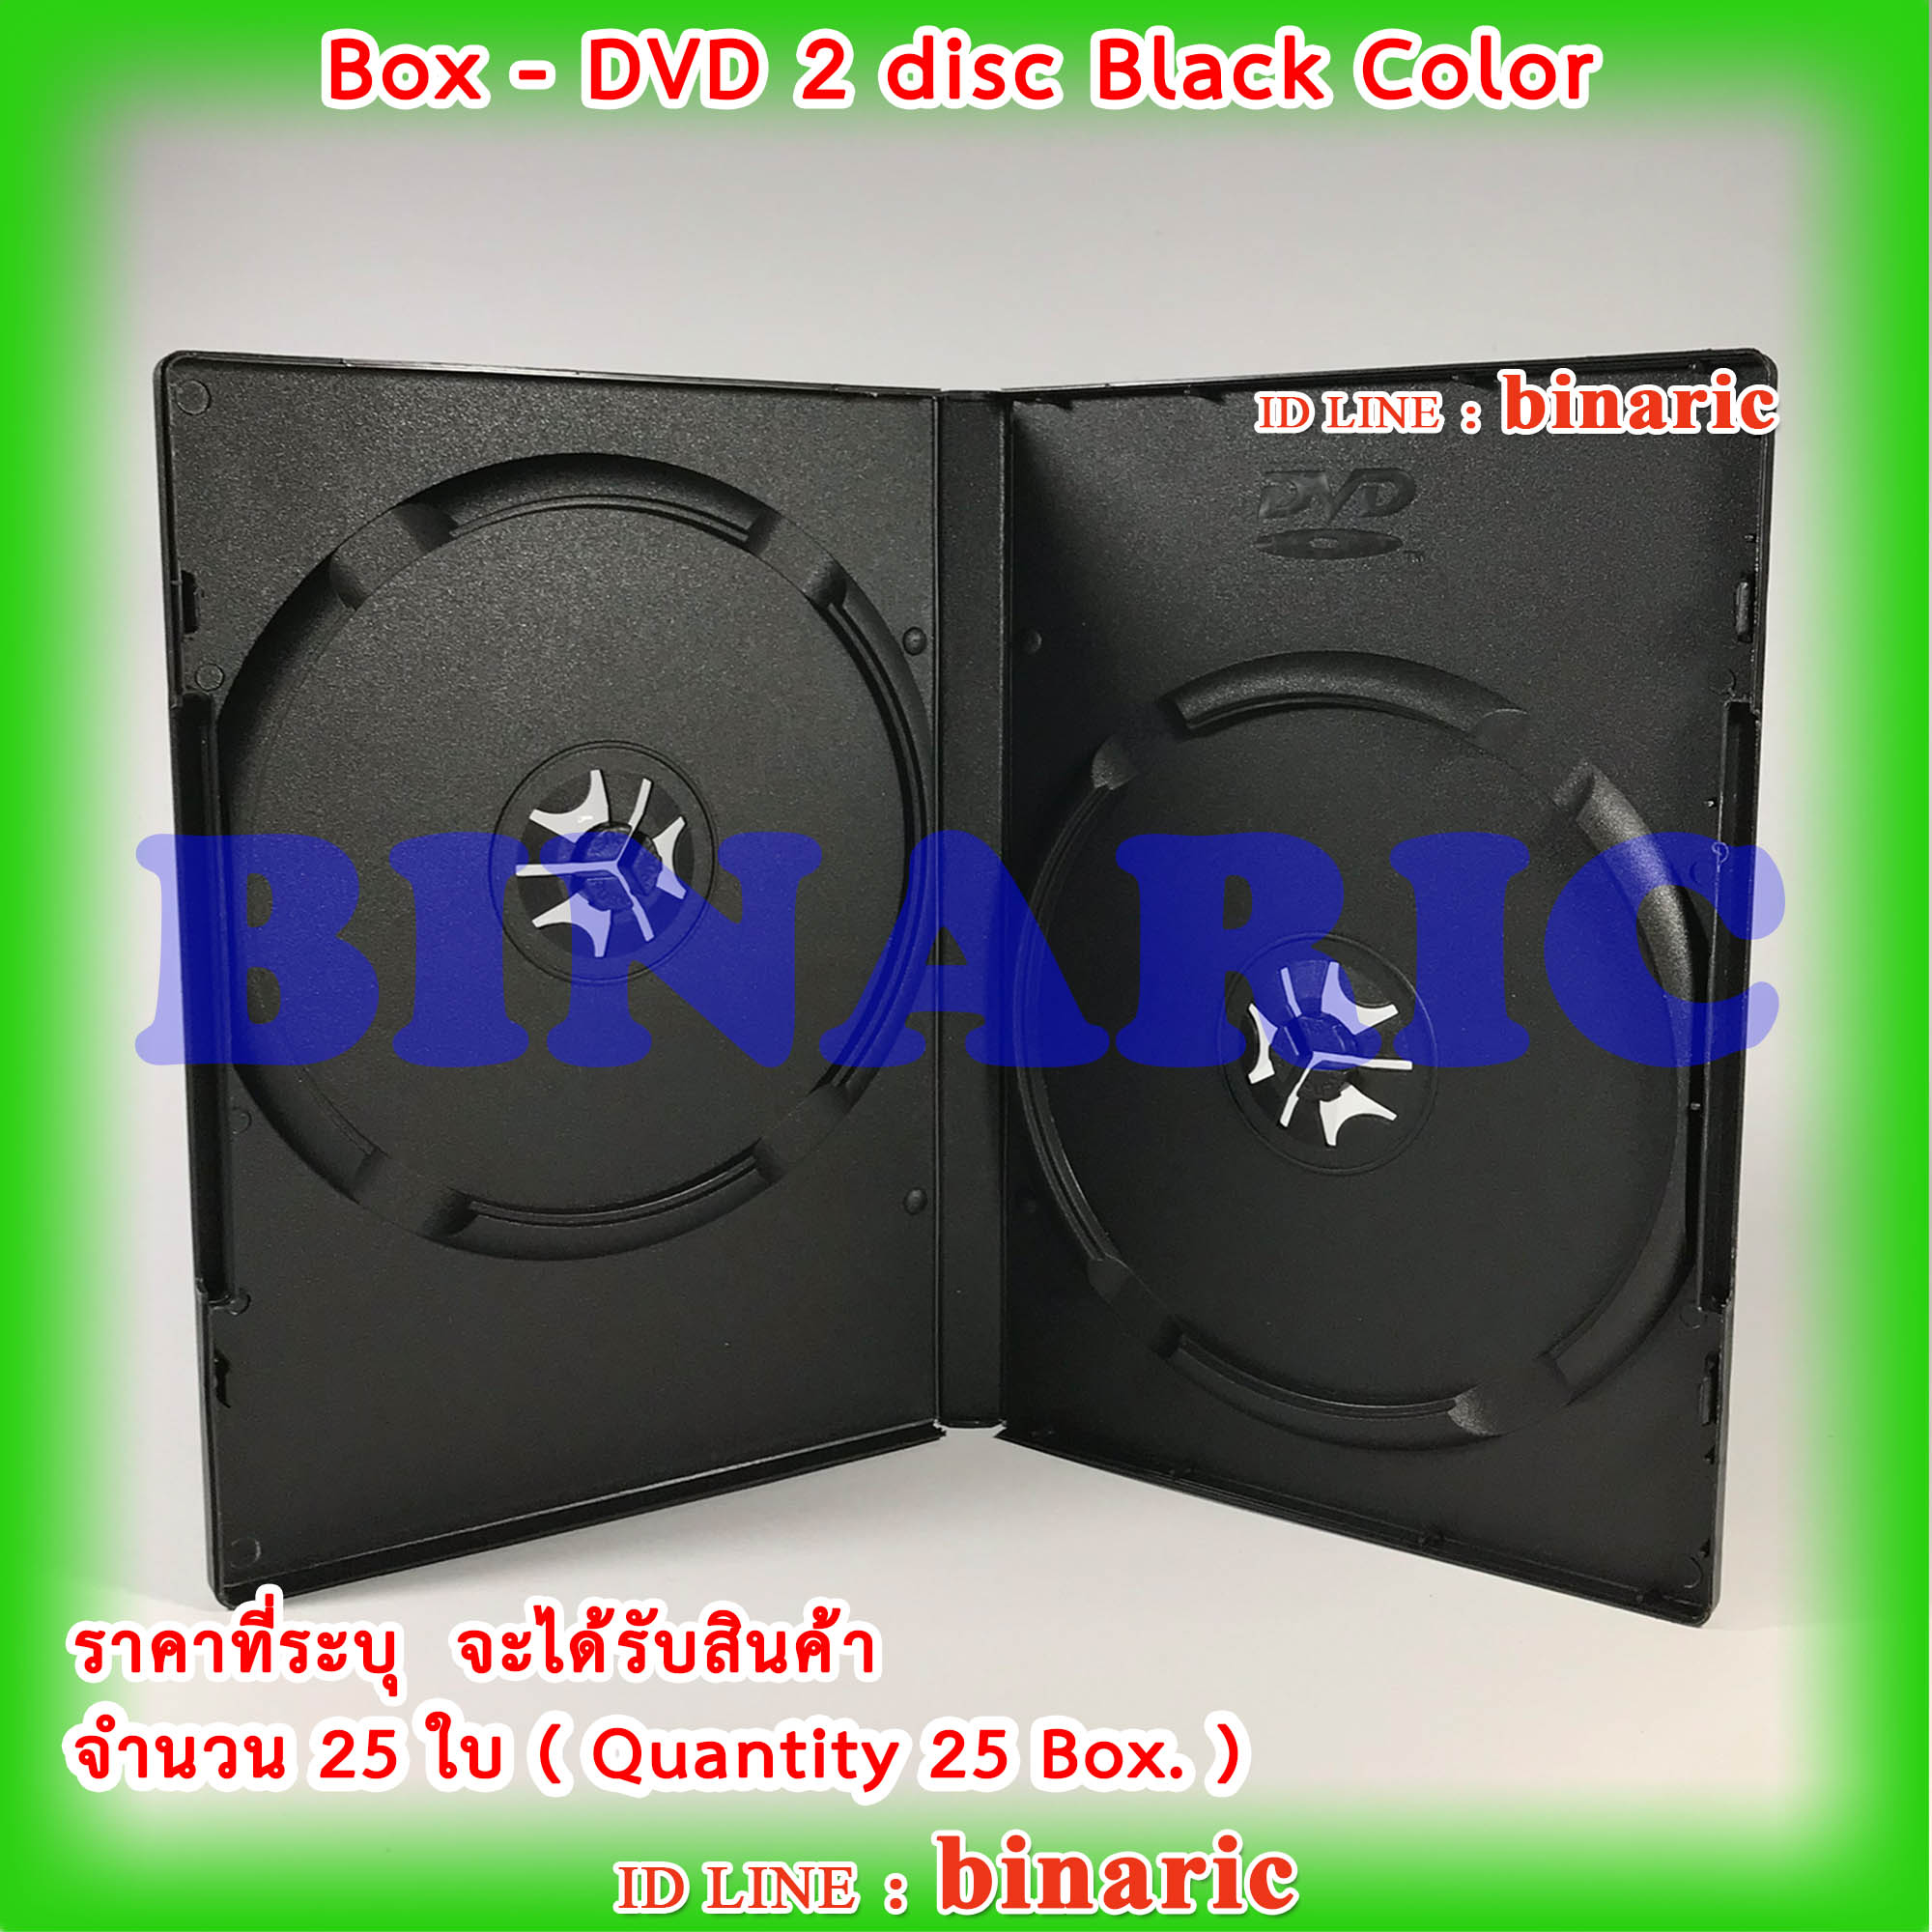 DVD Box Case 2 Disc  กล่อง DVD กล่องดีวีดี 2 แผ่น สีดำ (Pack 25 Box)  